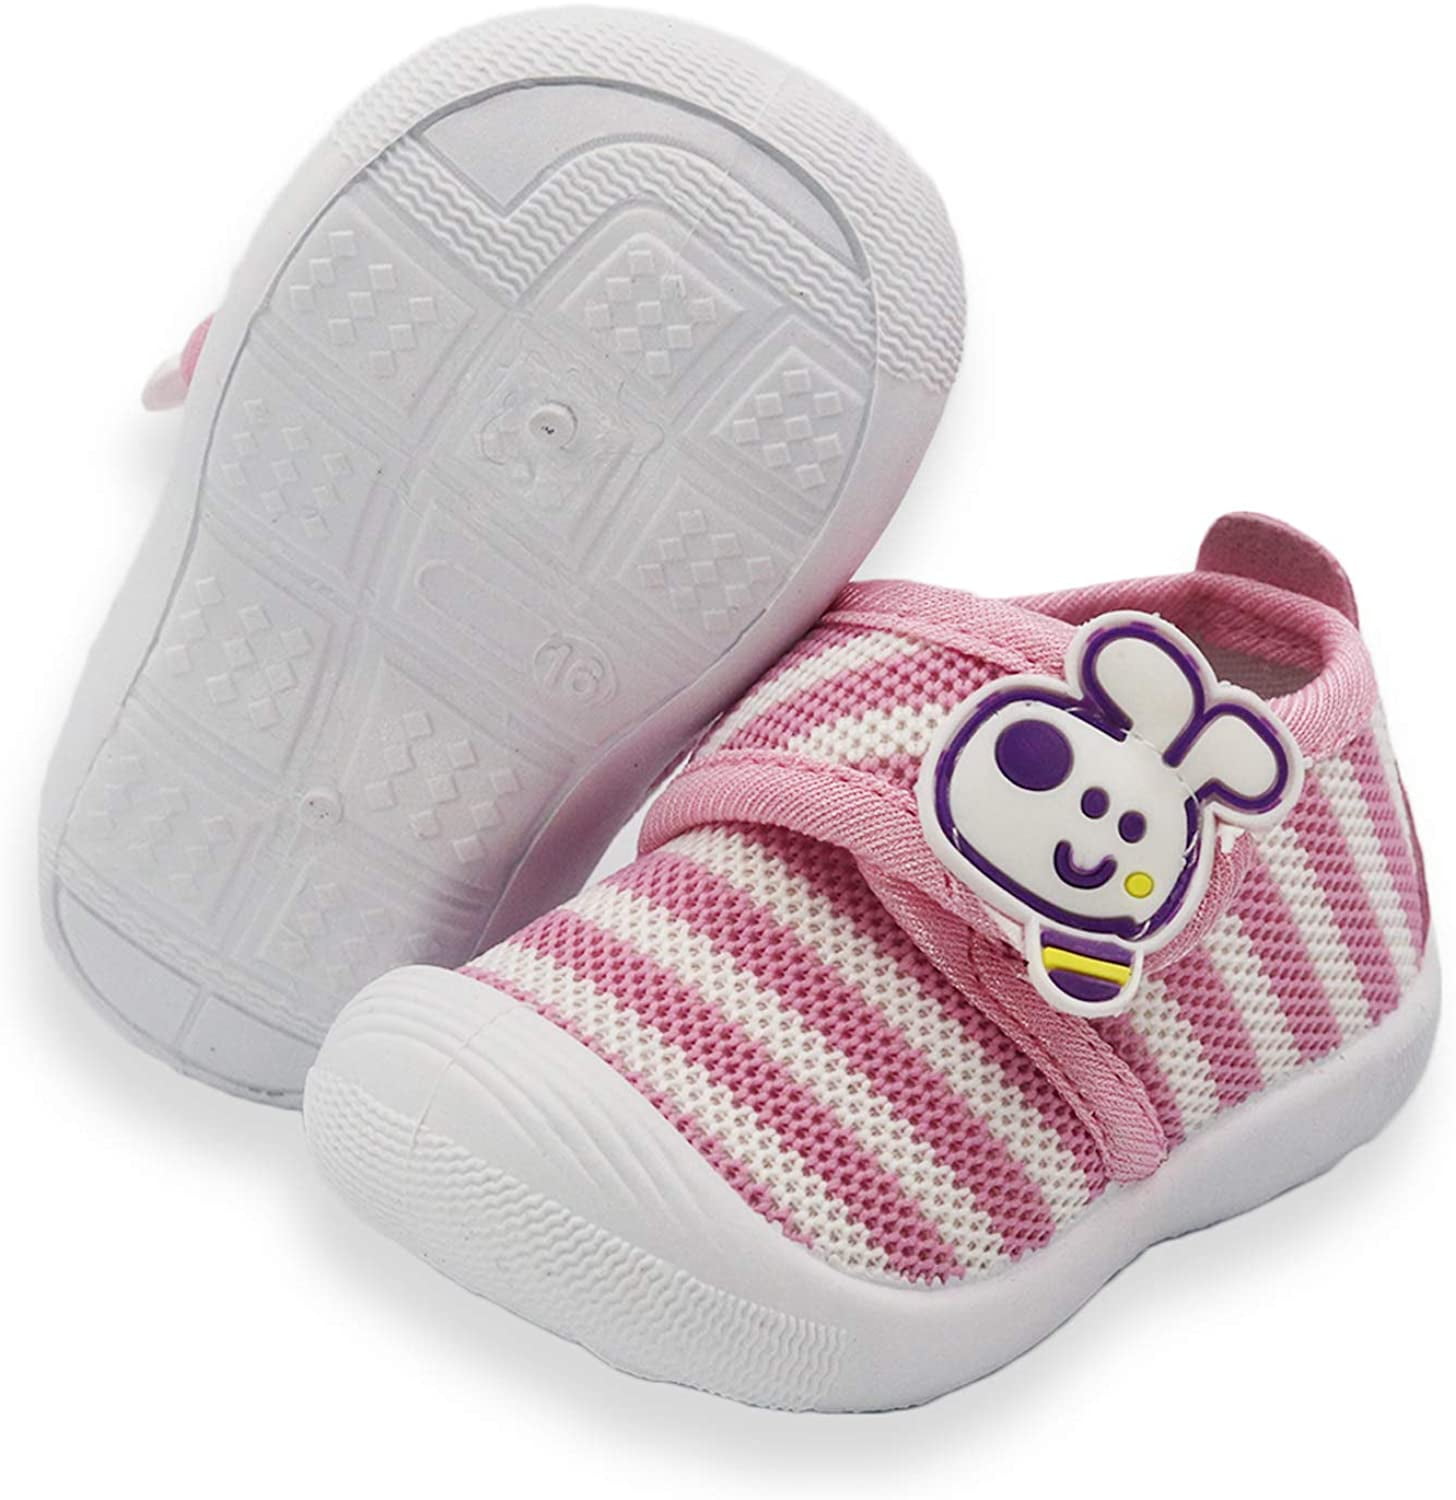 Toddler Children Kids Baby Boys GIrls Squeaky Single Shoes Sneaker Prewalker O1 